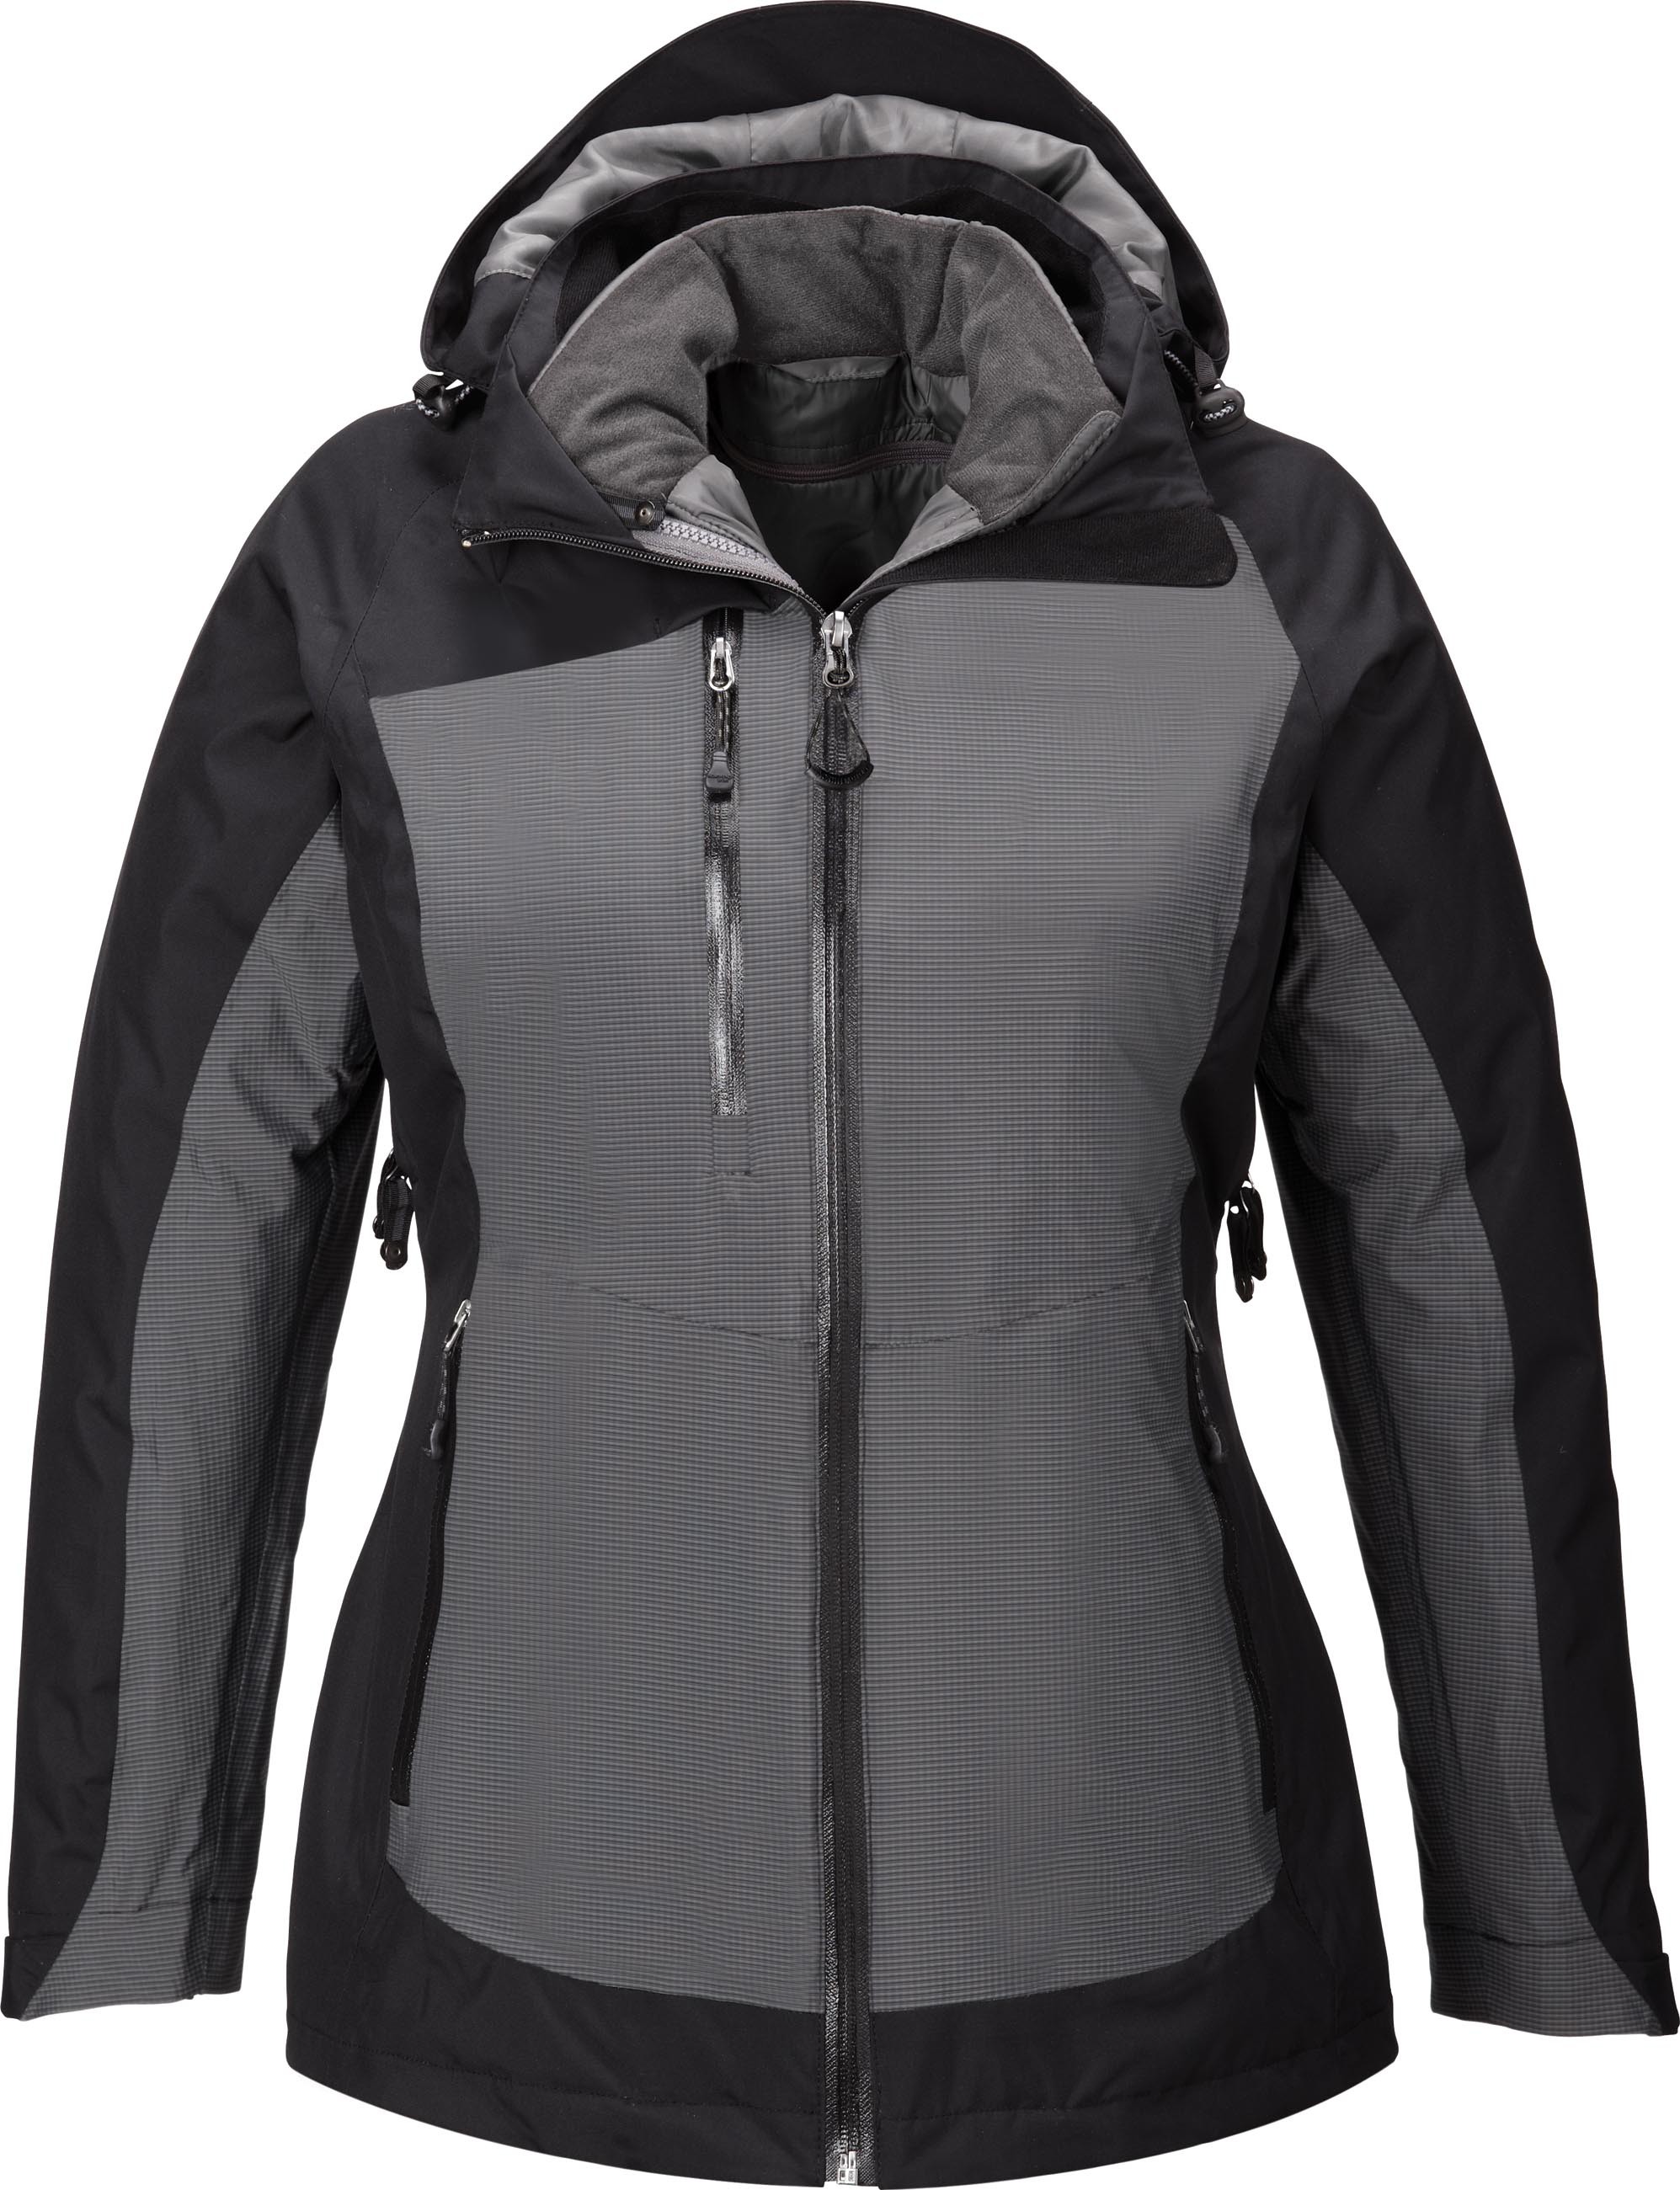 Ash City UTK 3 Warm.Logik 78663 - Alta Ladies' 3-In-1 Seam-Sealed Jacket With Insulated Liner